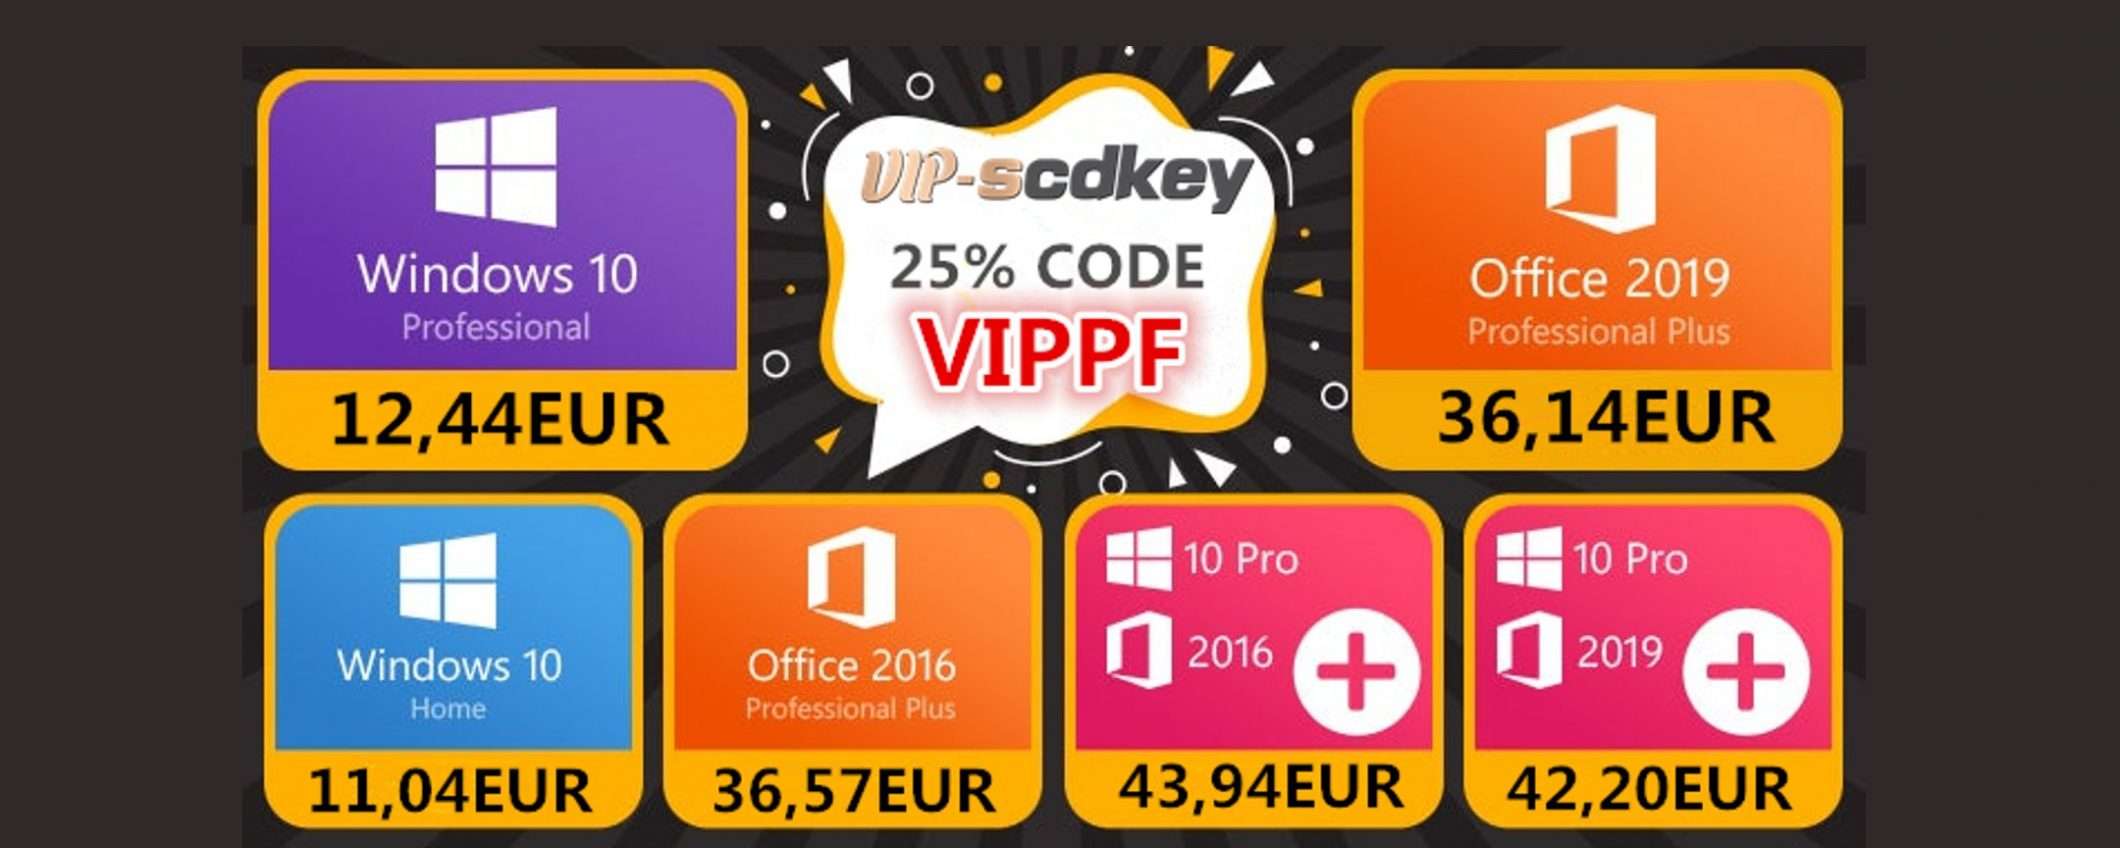 Sconti VIP-SCDkey: Windows 10 PRO a 12€, Office 2019 a 36€